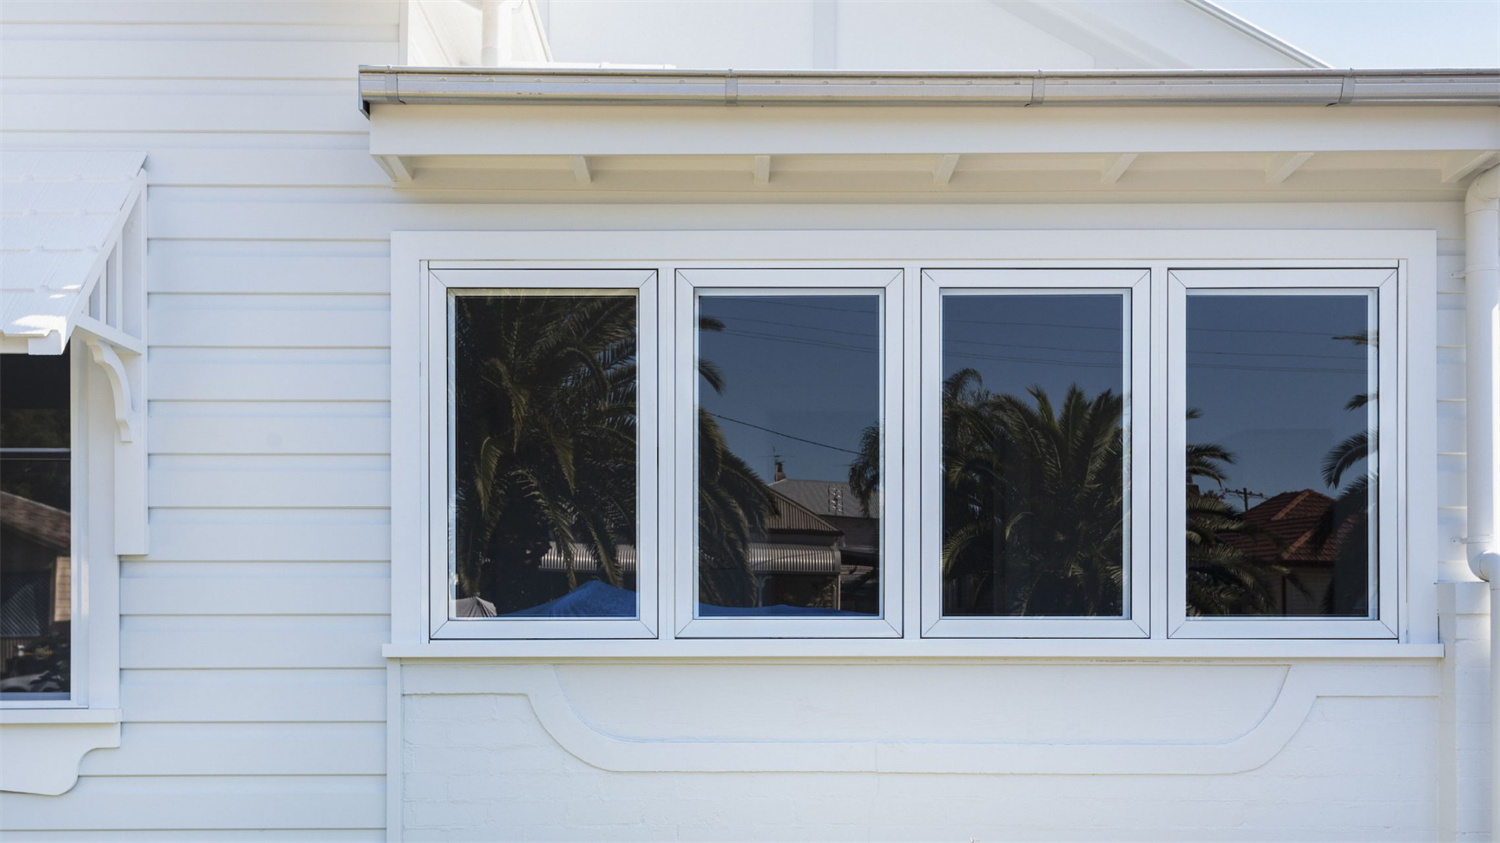 Latest style villa aluminium tempered glass exterior insulated double casement windows